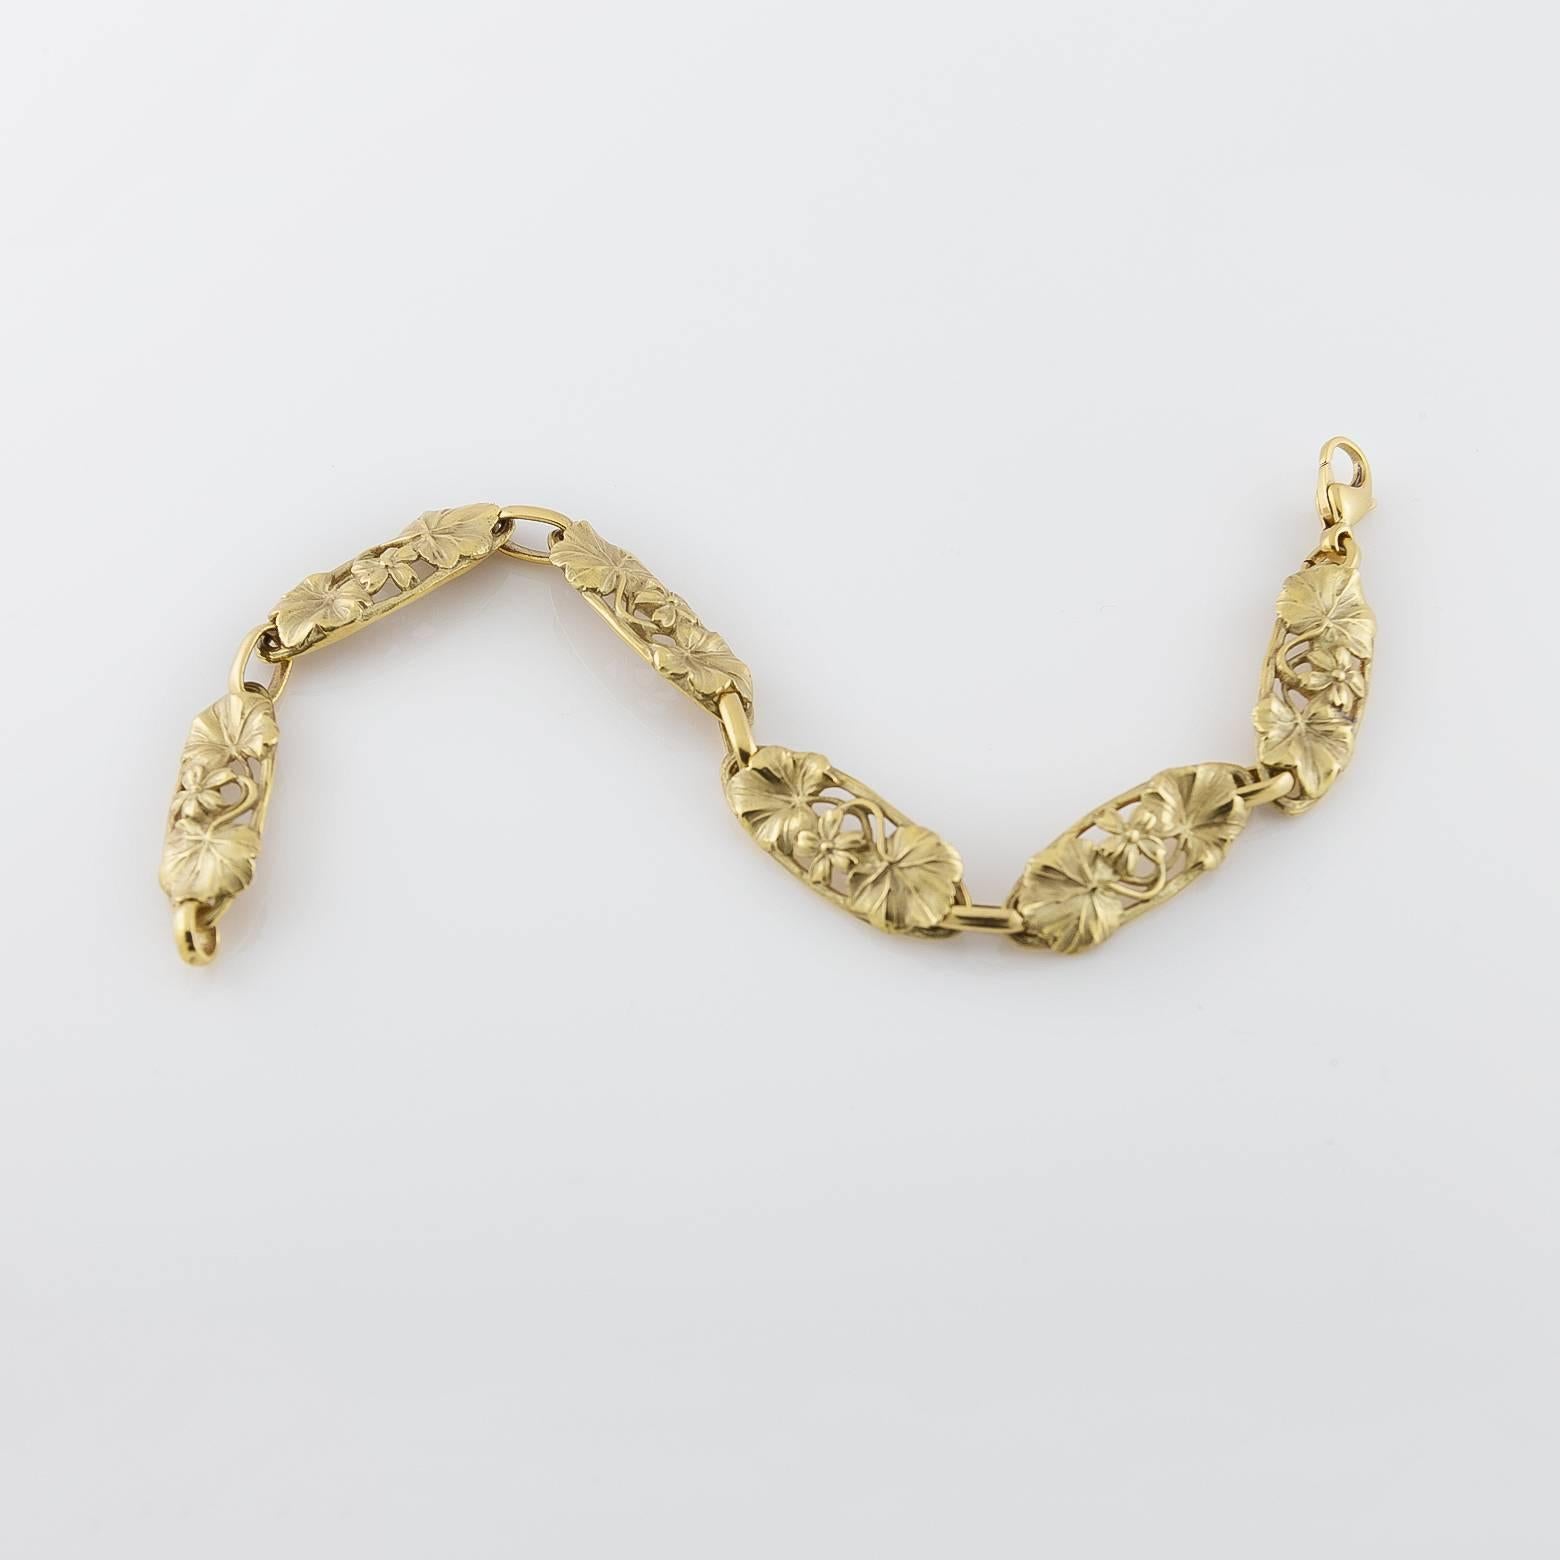 Women's or Men's Arnould Art Nouveau 18K Gold Link Bracelet Re-Edition with Flowers and Vines For Sale